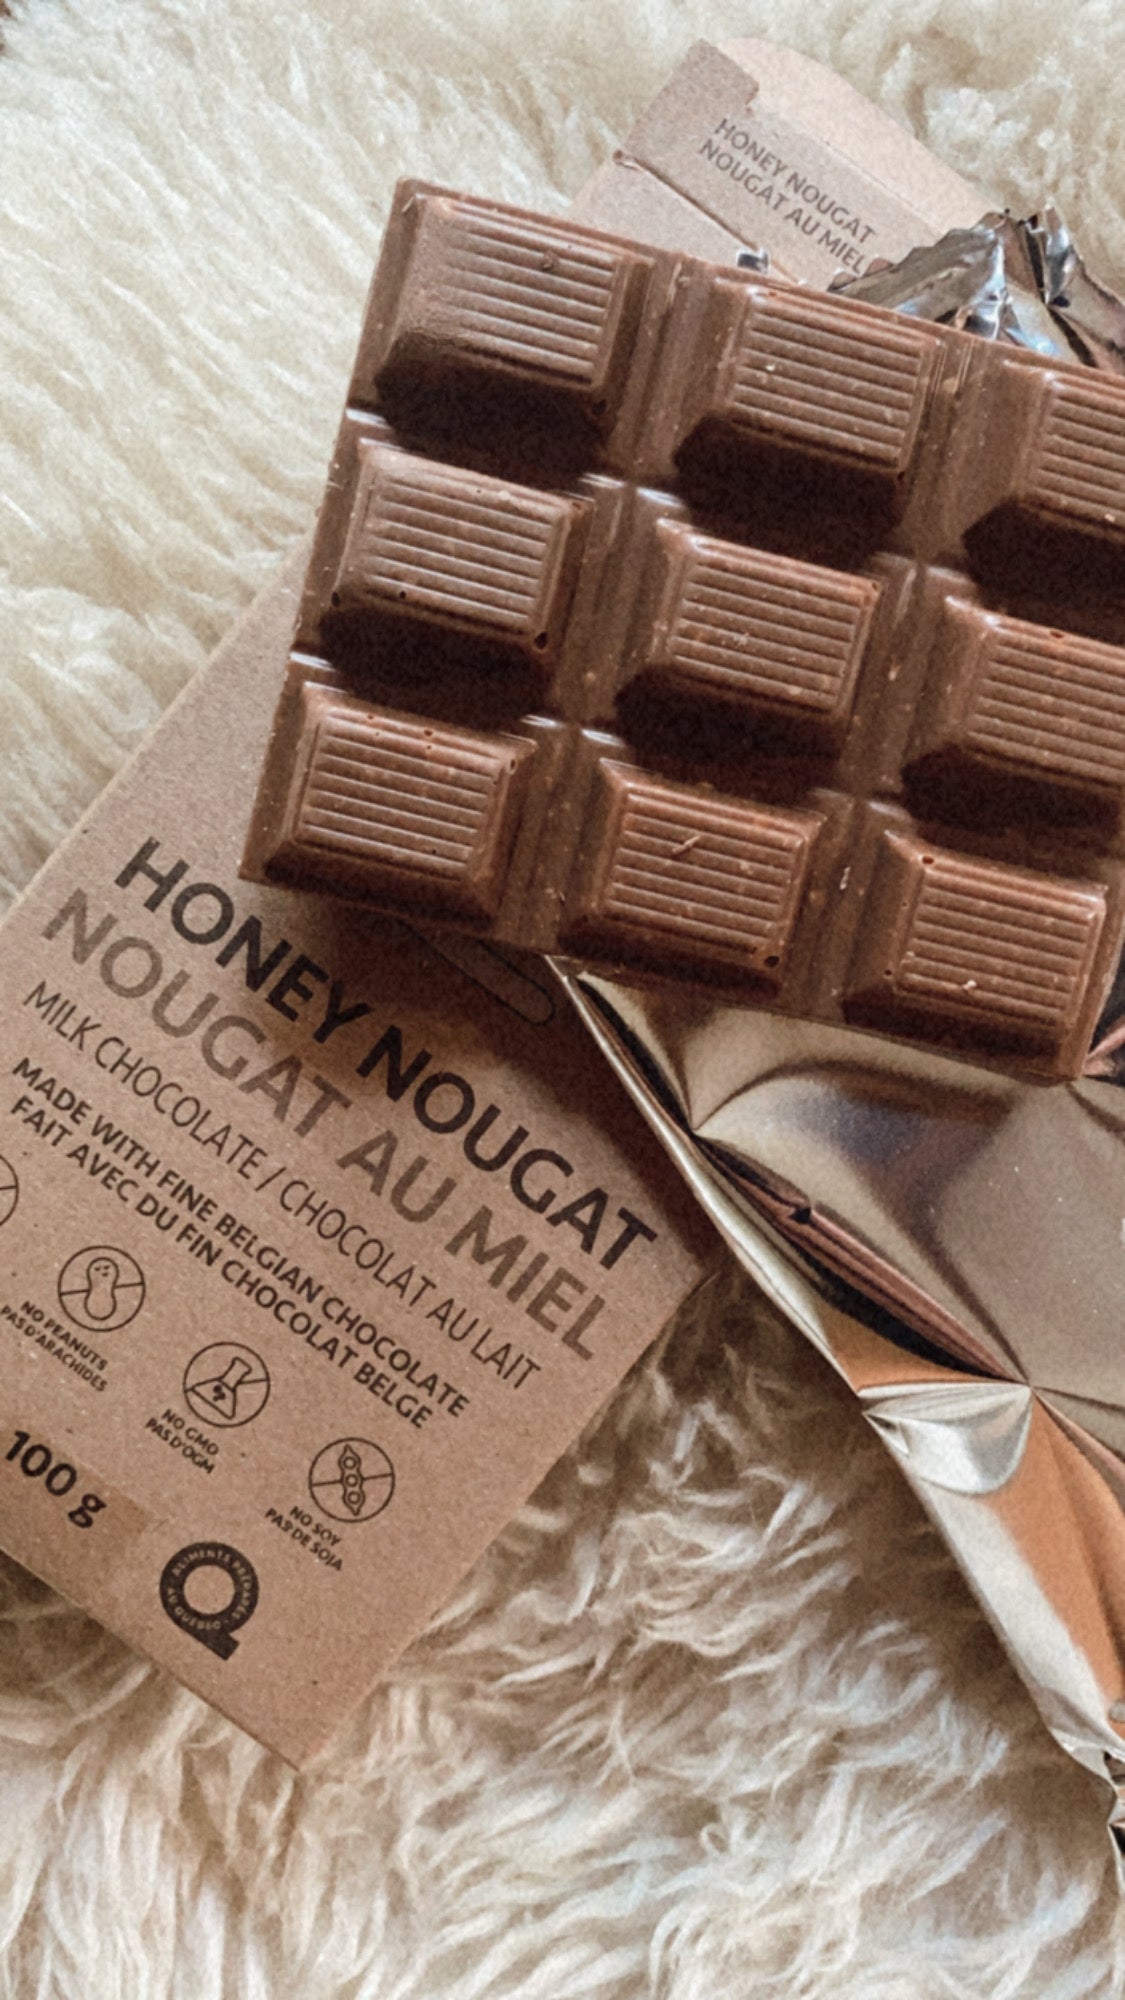 Fair-trade Canadian Chocolate Bars